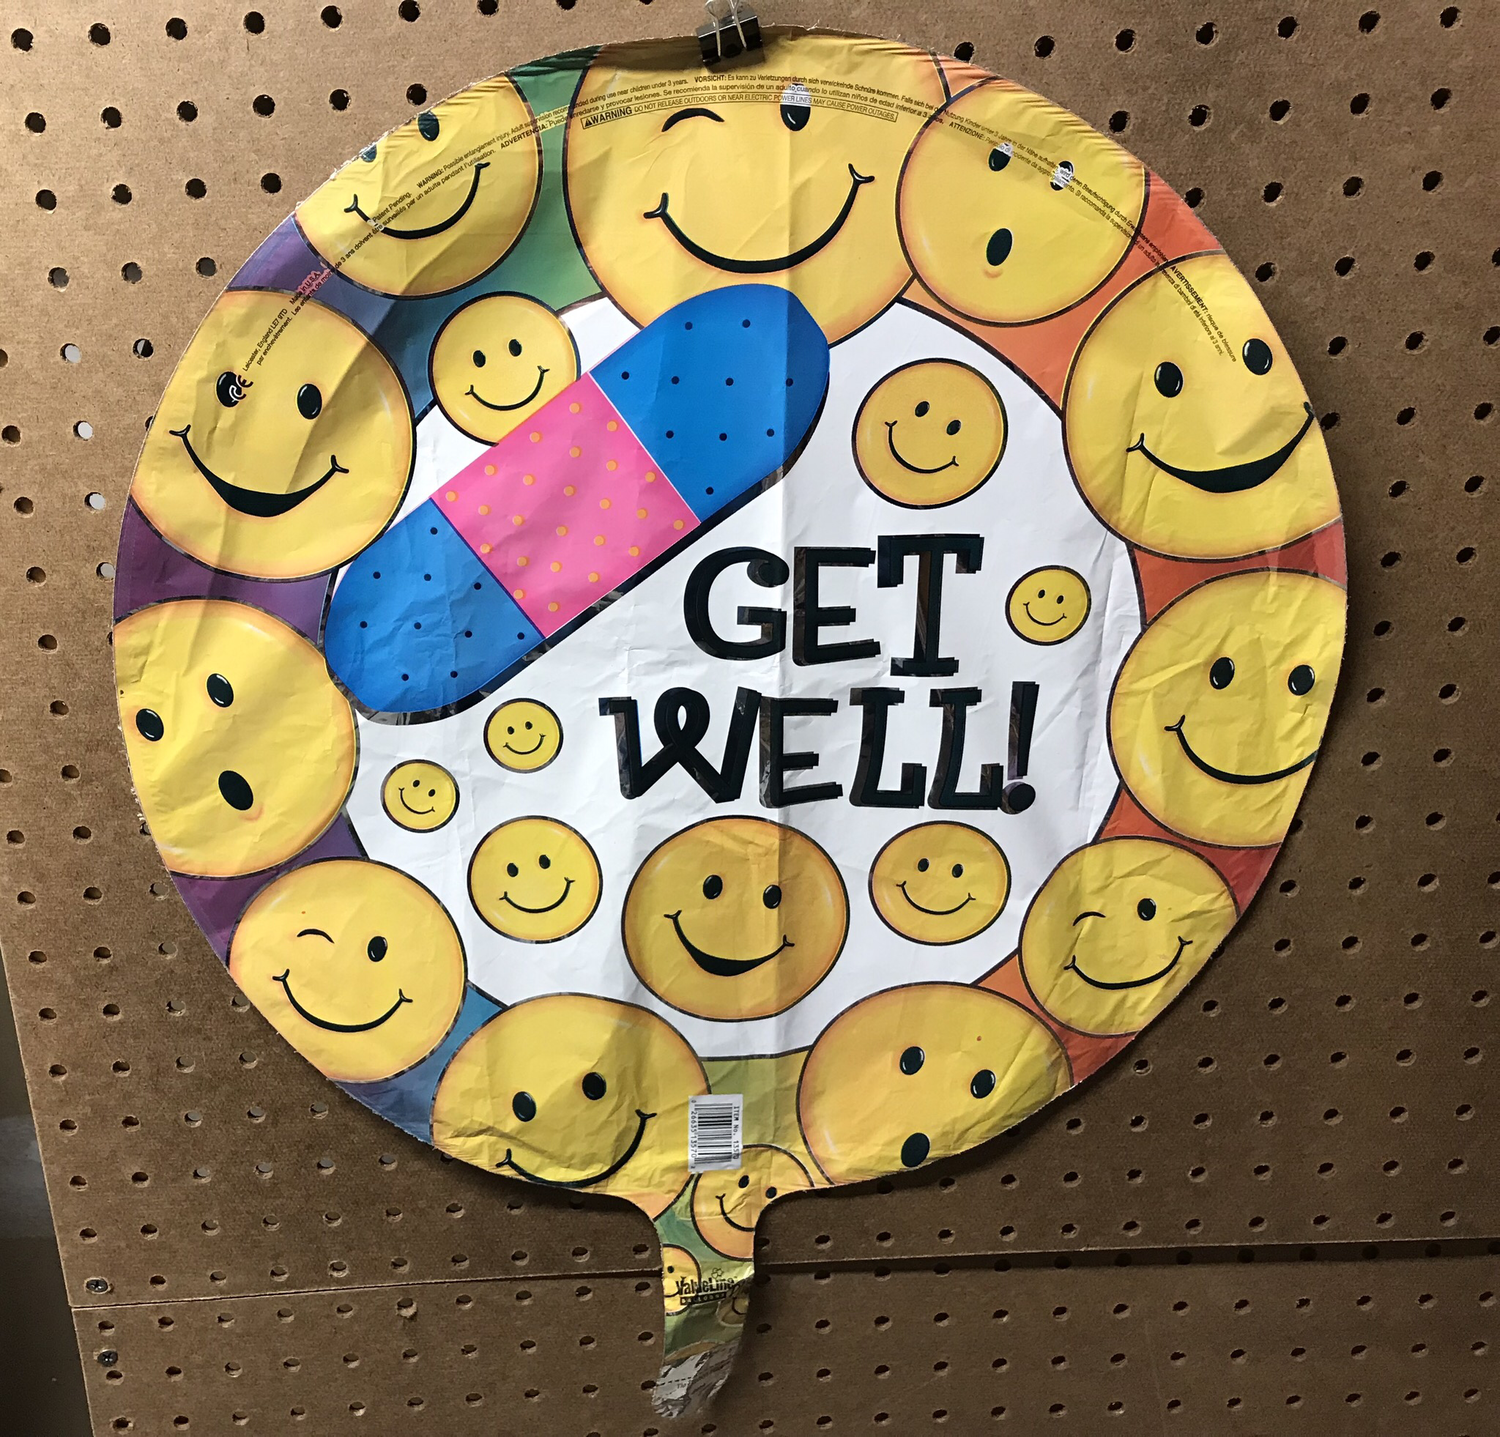 Get well miler balloons